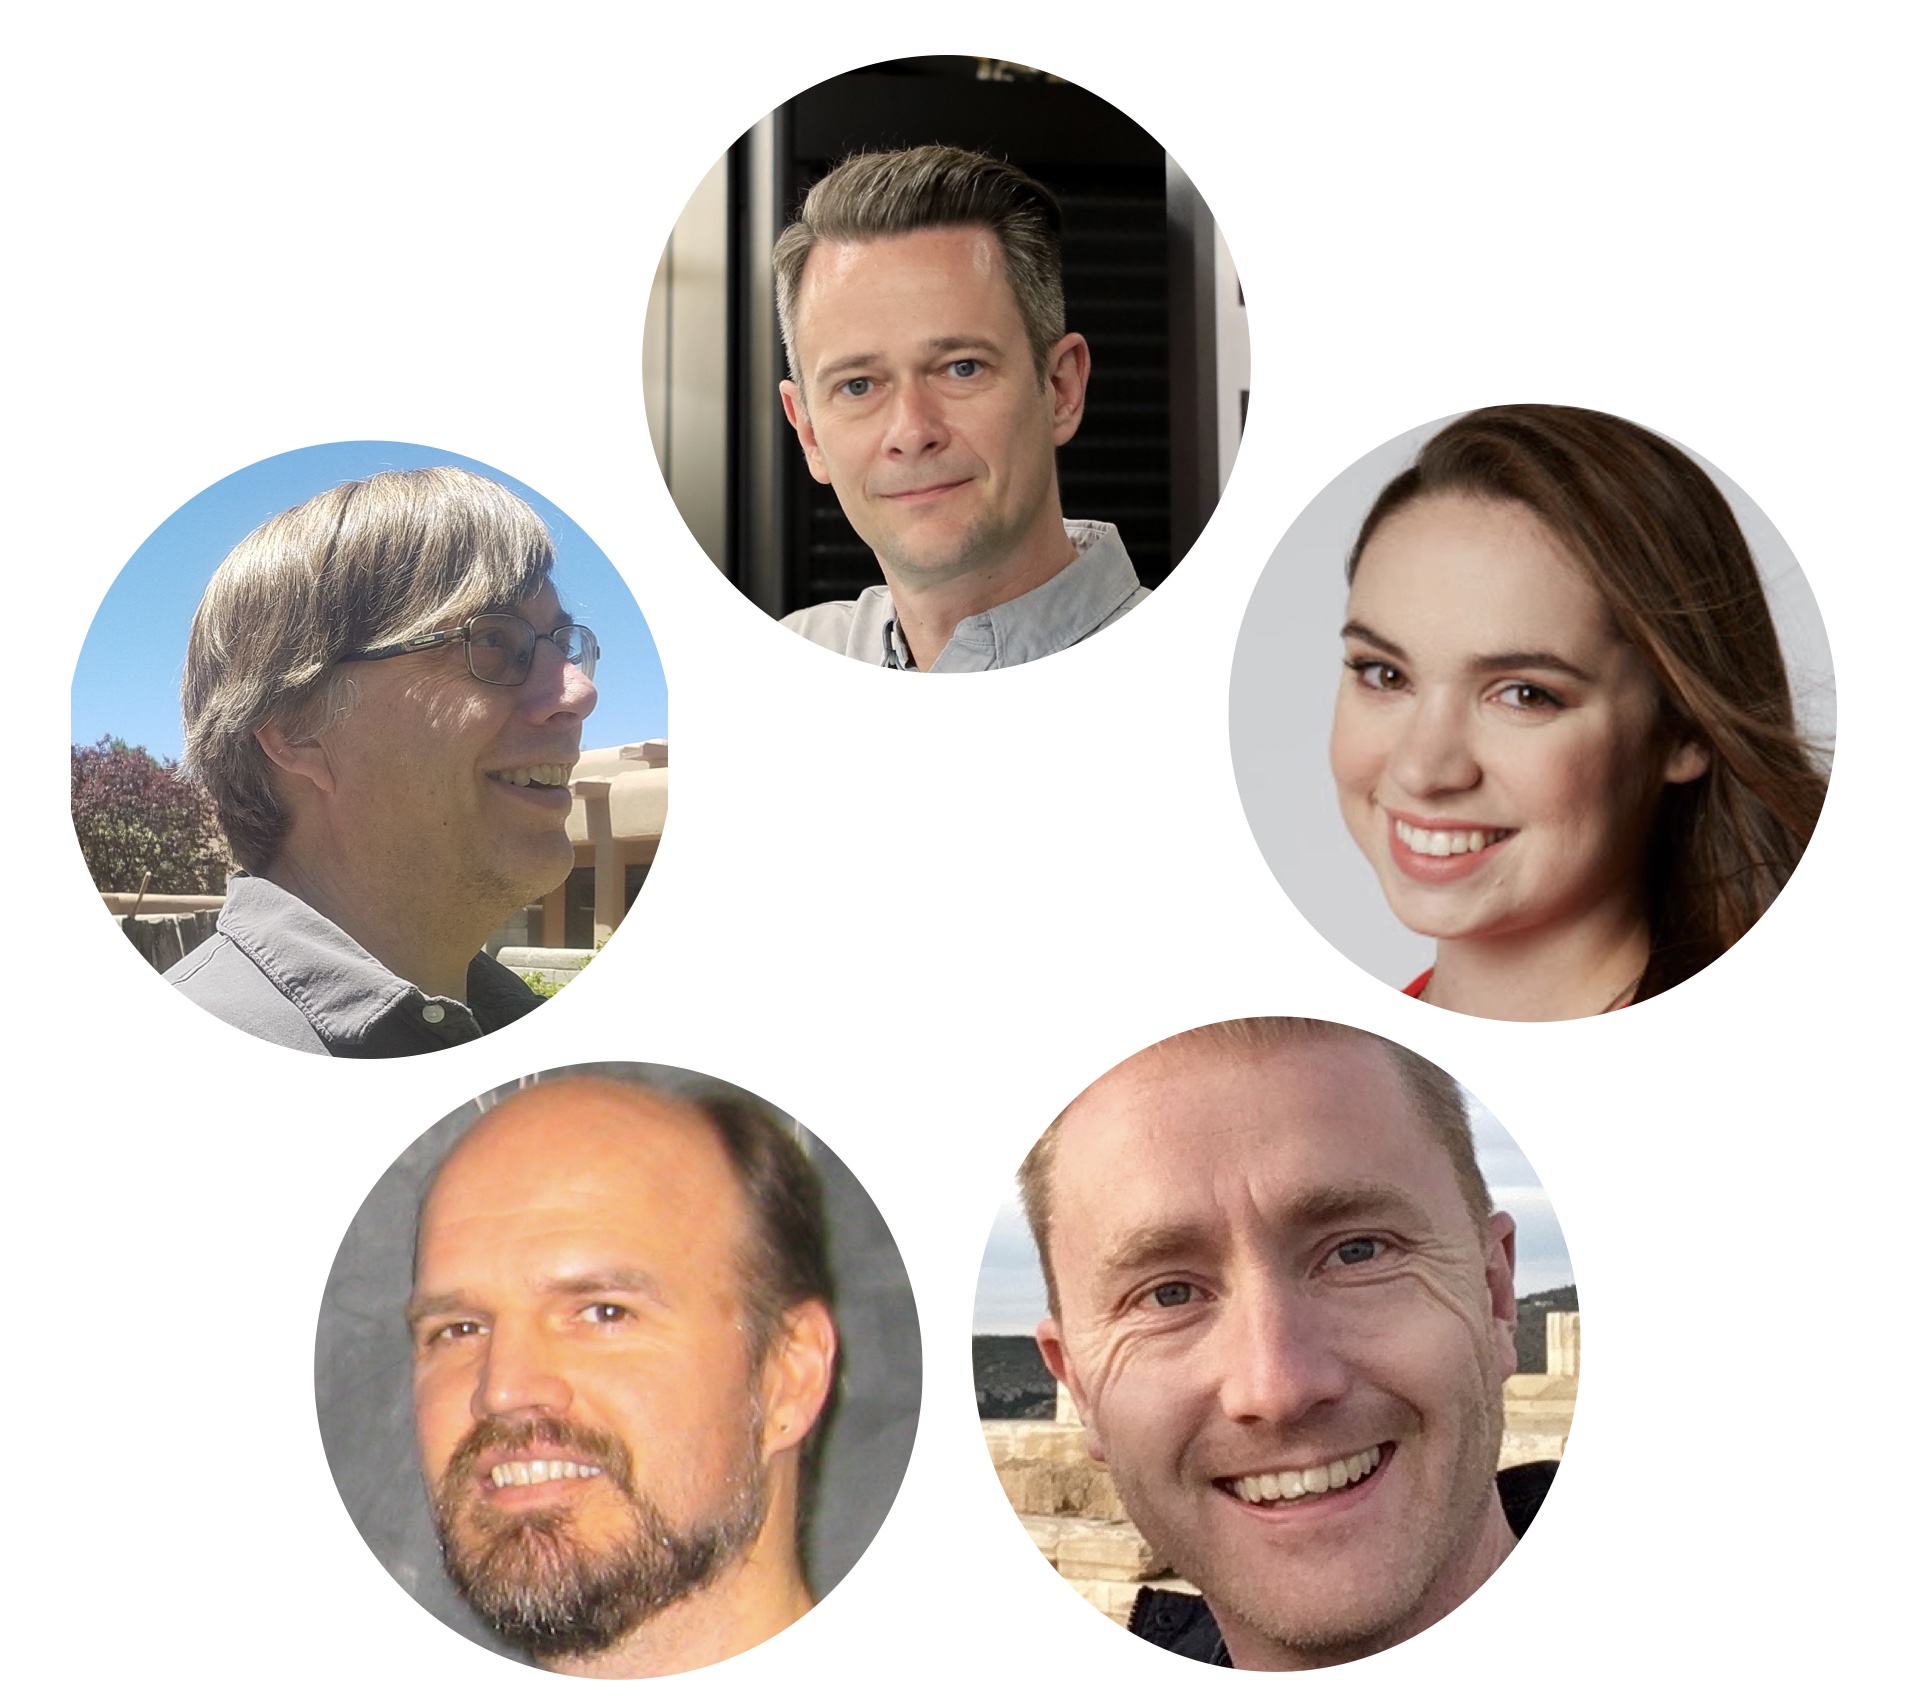 QuantumSimulation_2021_team - Joe Carlson, Gaute Hagen, Crystal Noel, Andrew Sornborger and David Weld